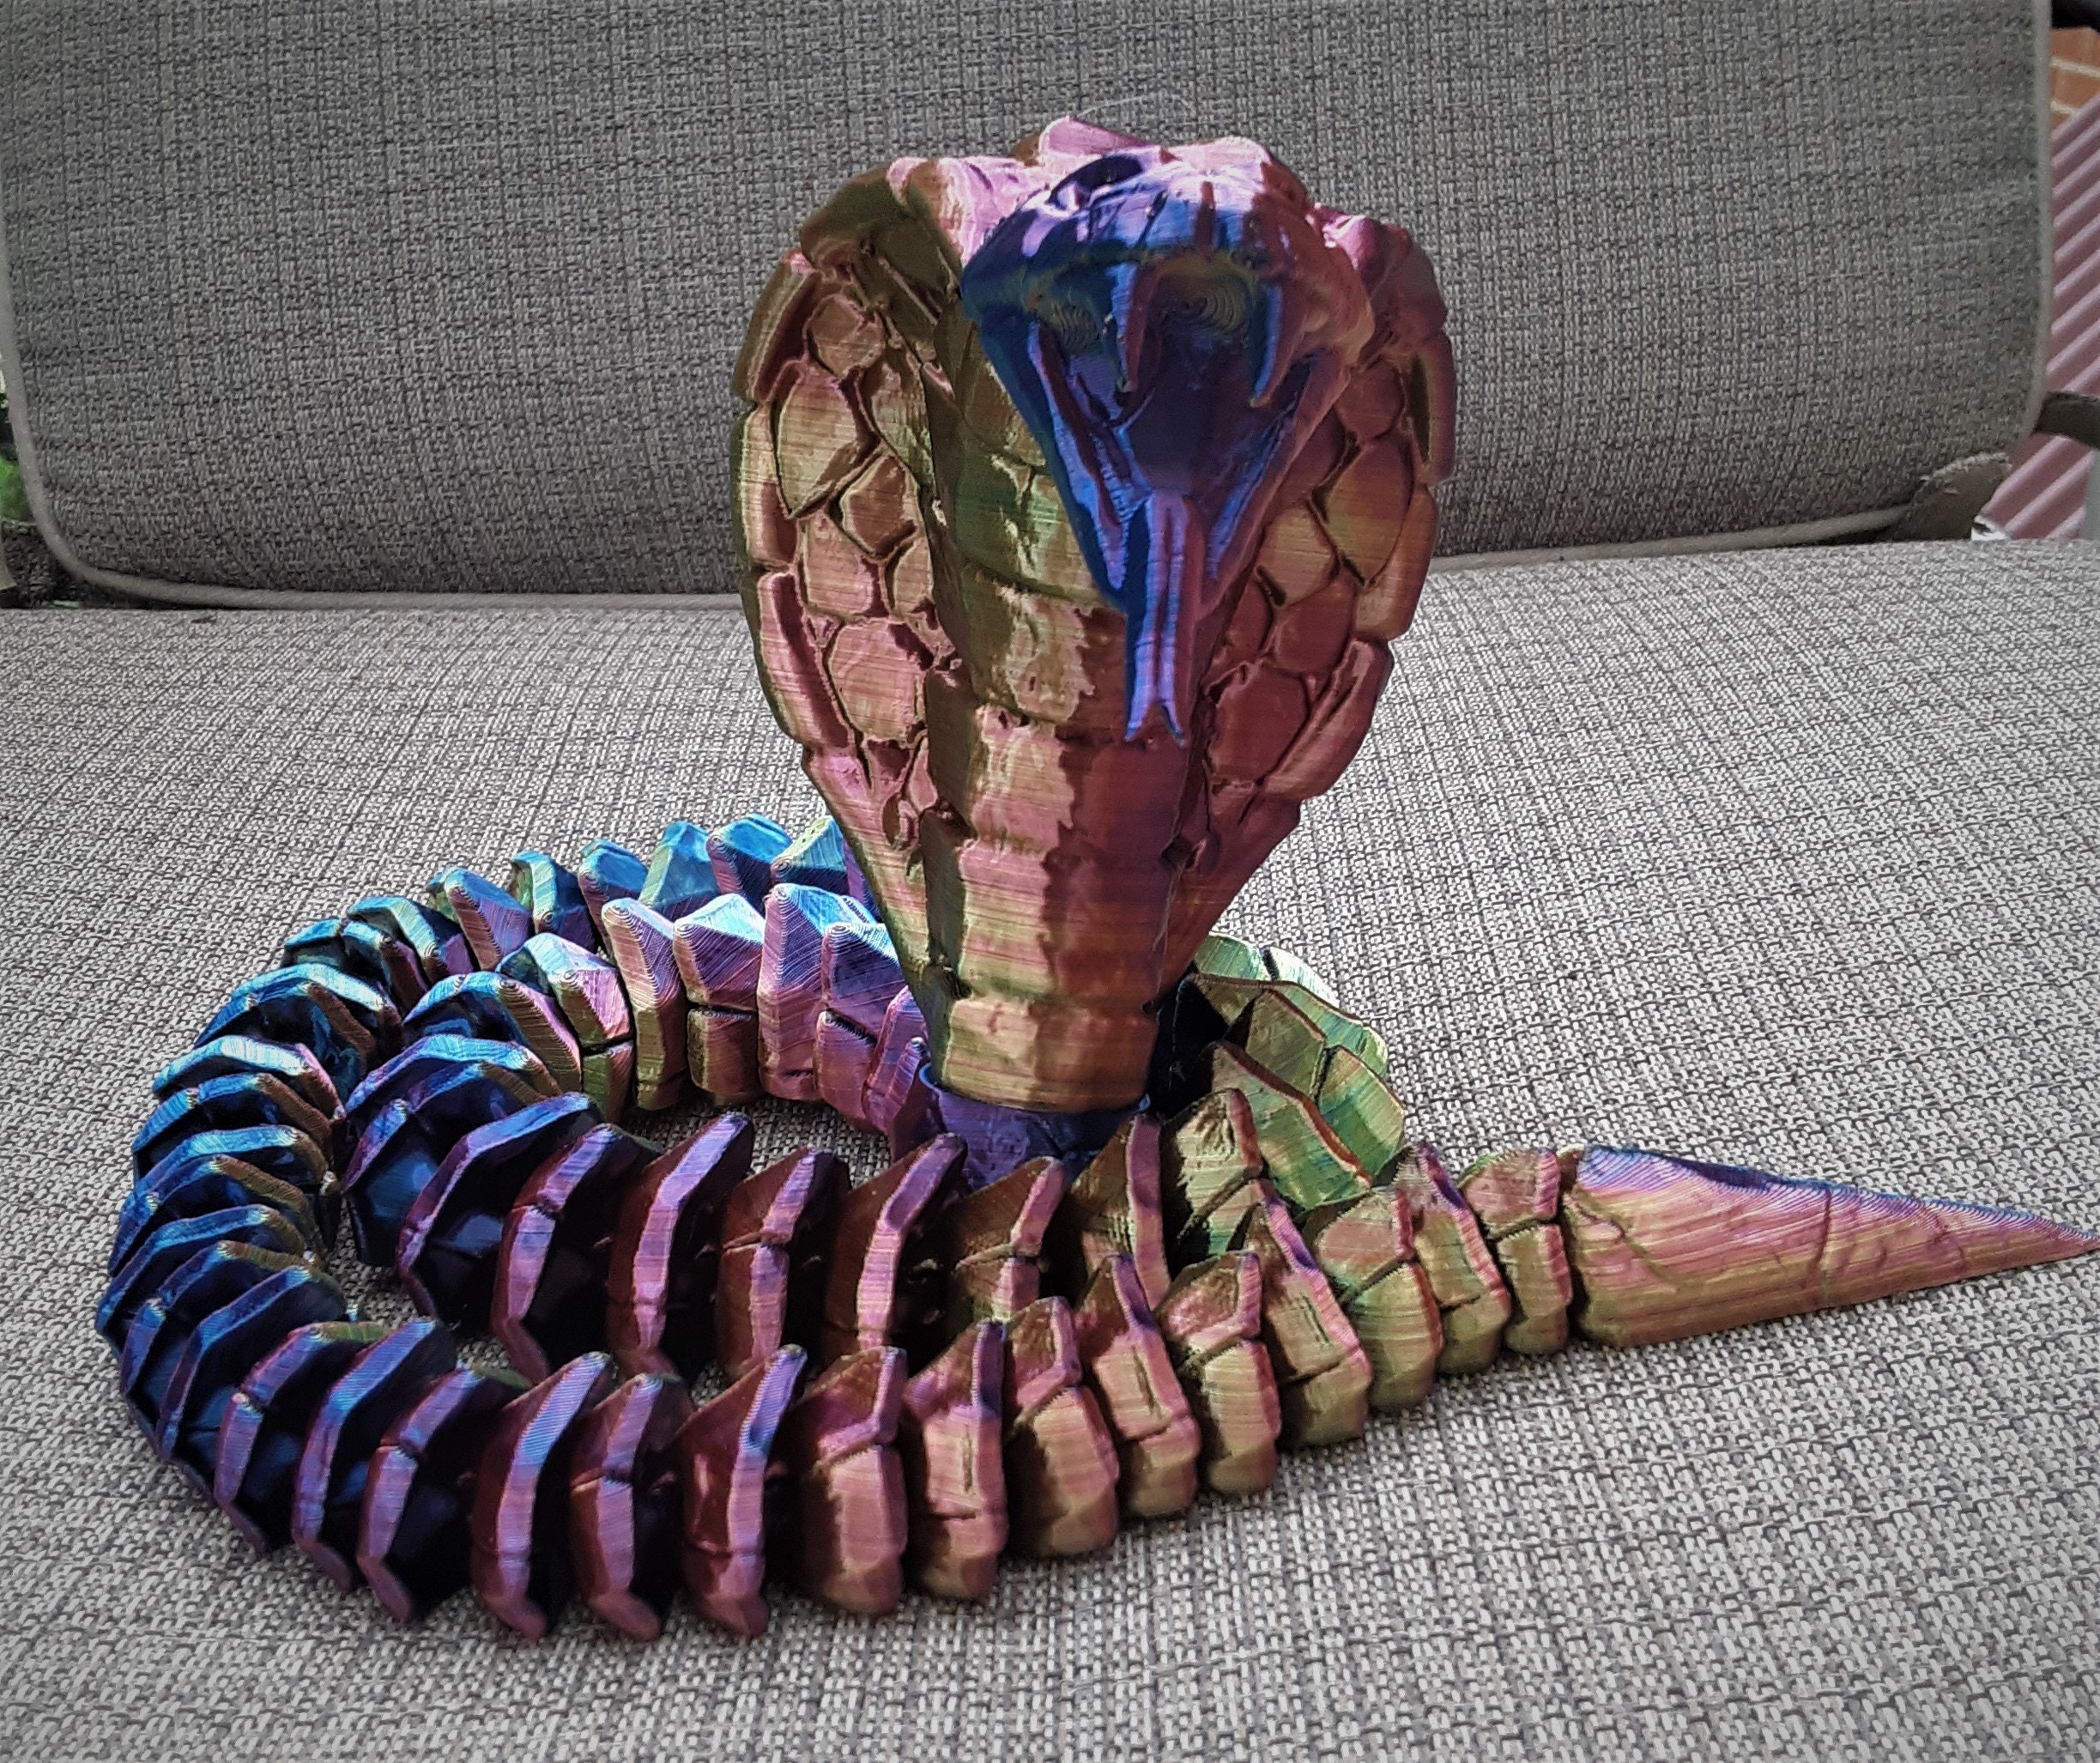 Cobra Snake 3D Print Model by Alexander3dart